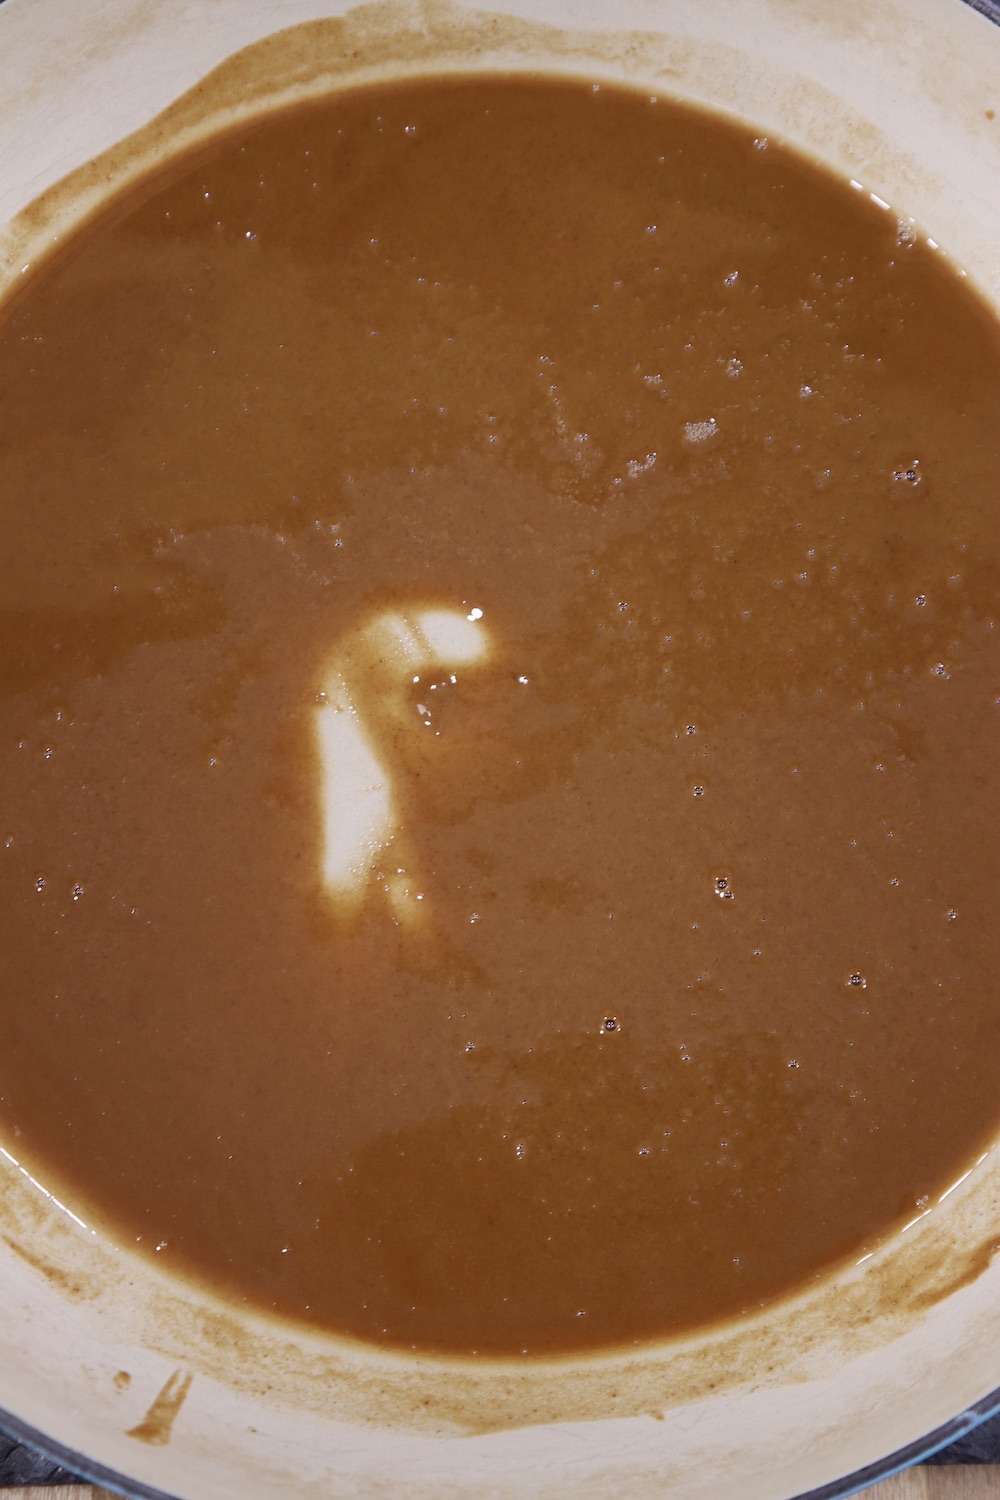 Pan with dark roux for making crawfish pie